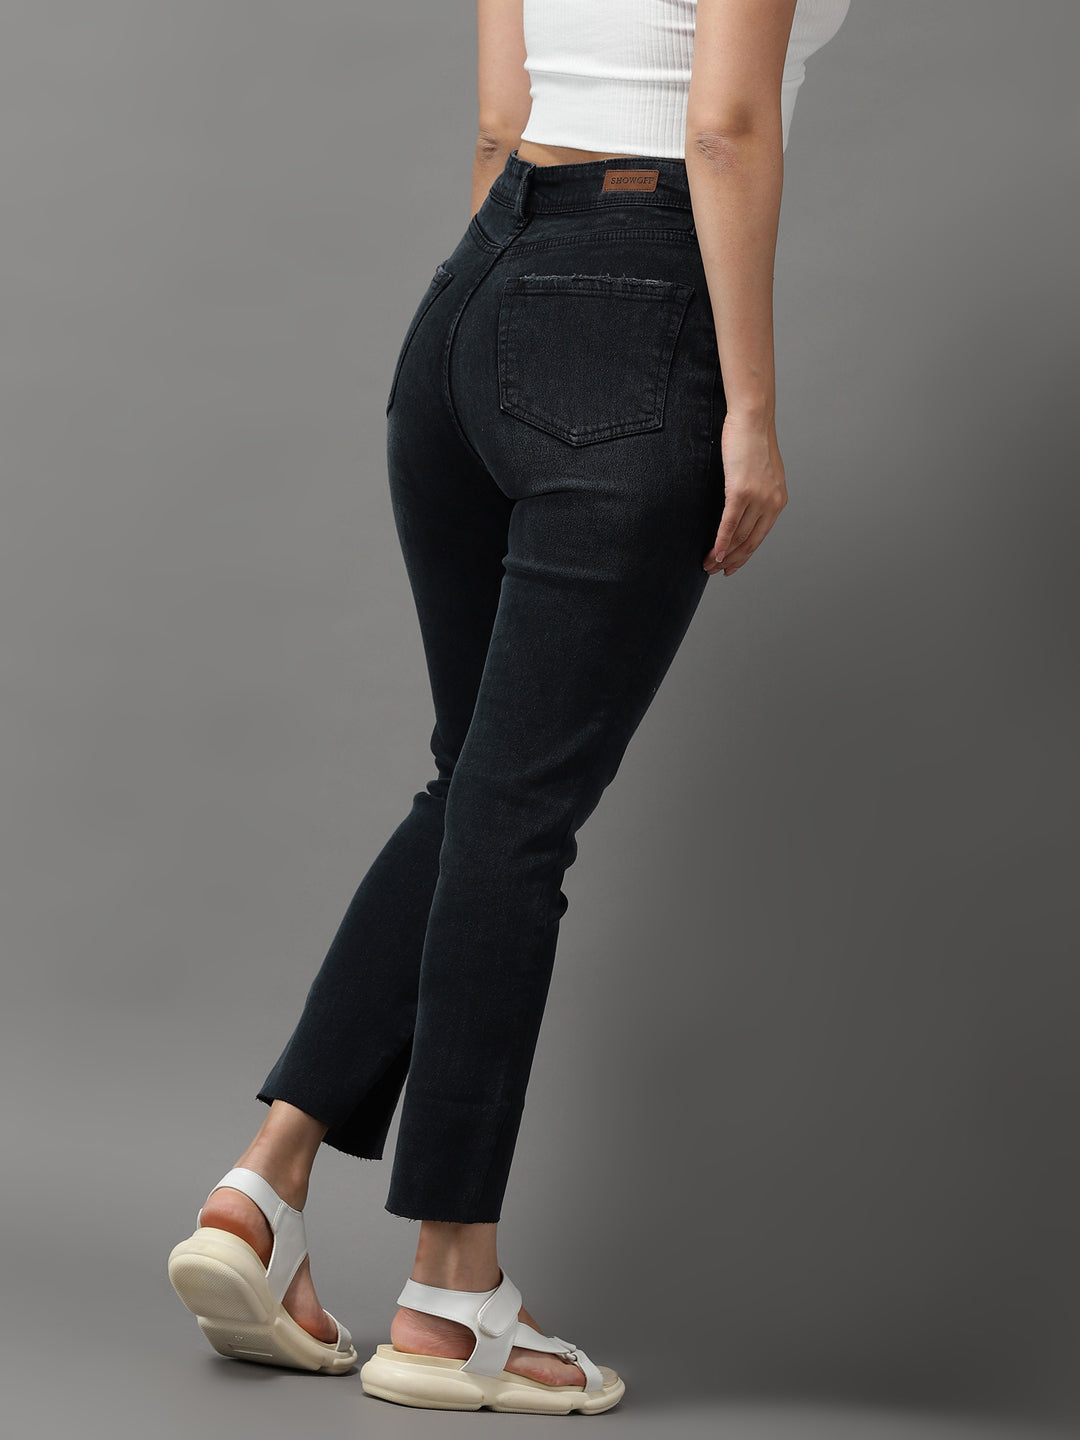 Women's Charcoal Solid Slim Fit Denim Jeans